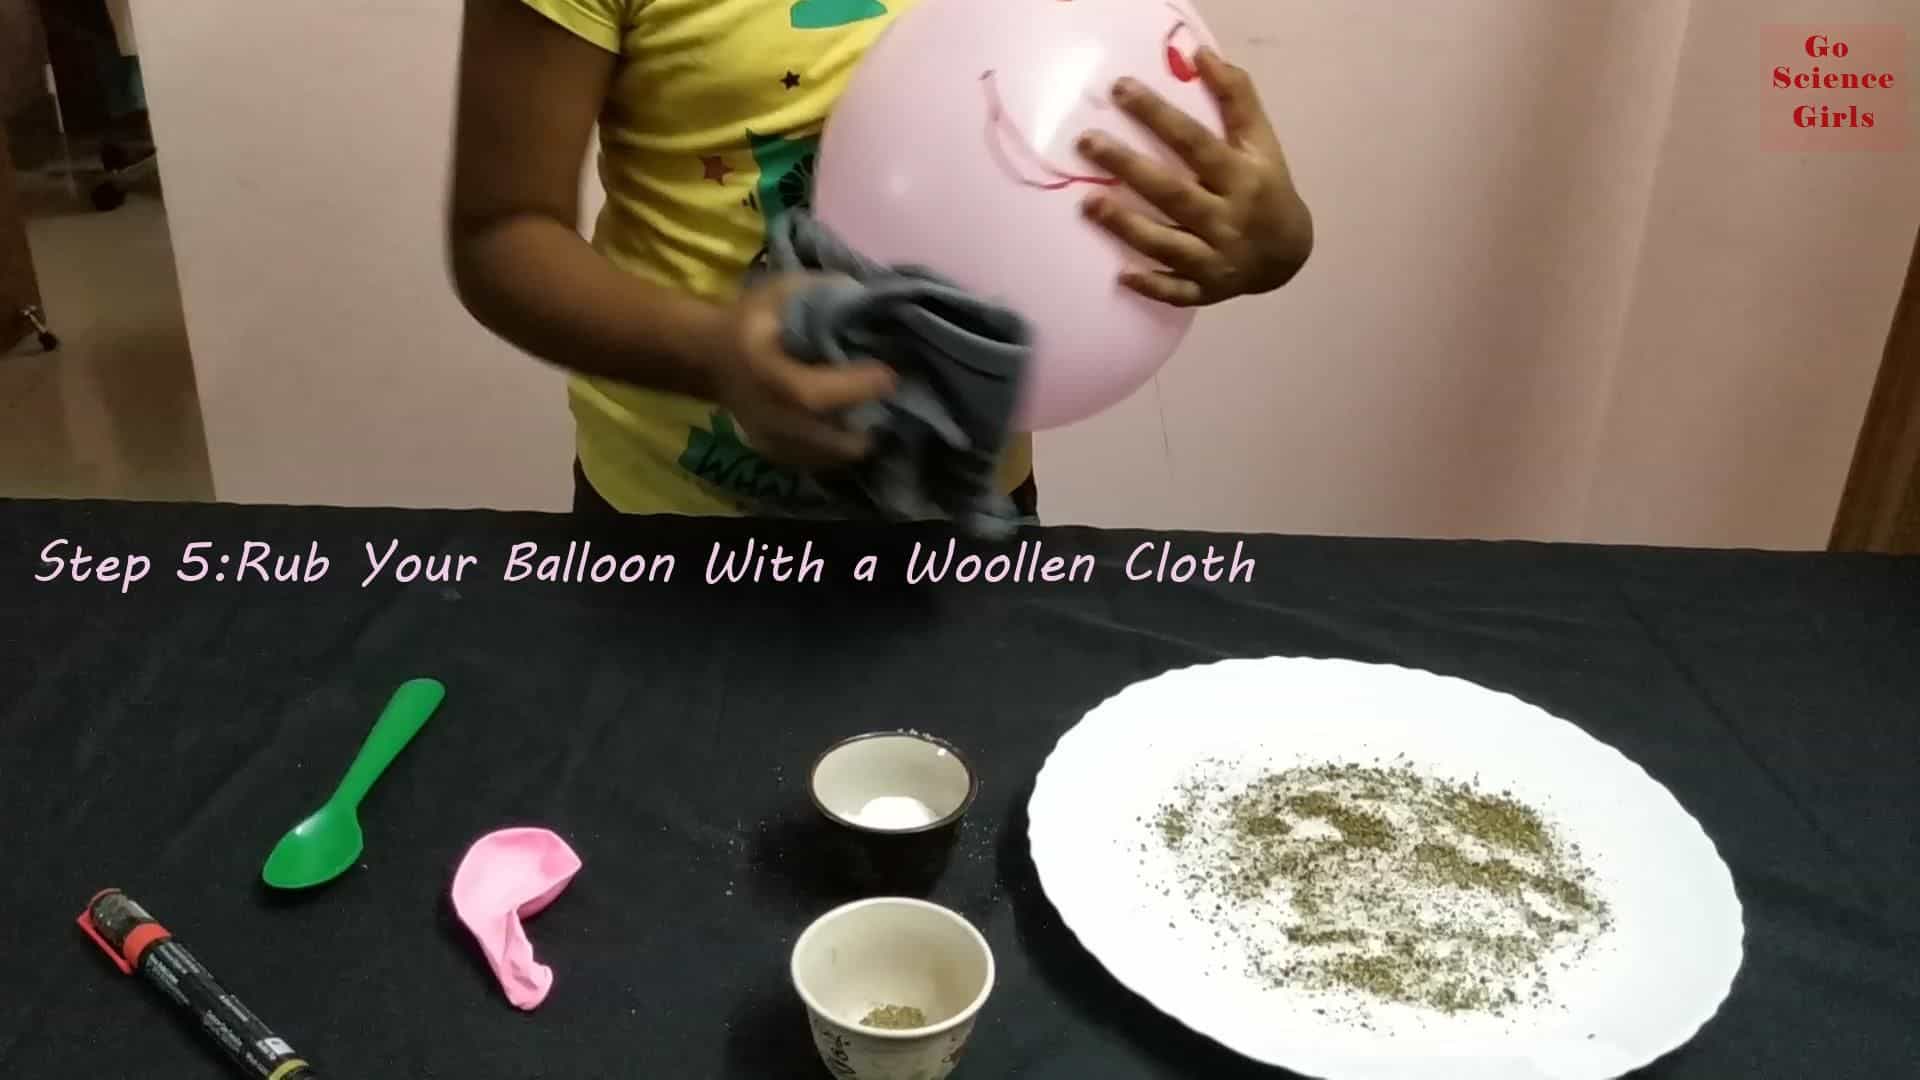 Rub Balloon With Woollen Cloth Go Science Girls